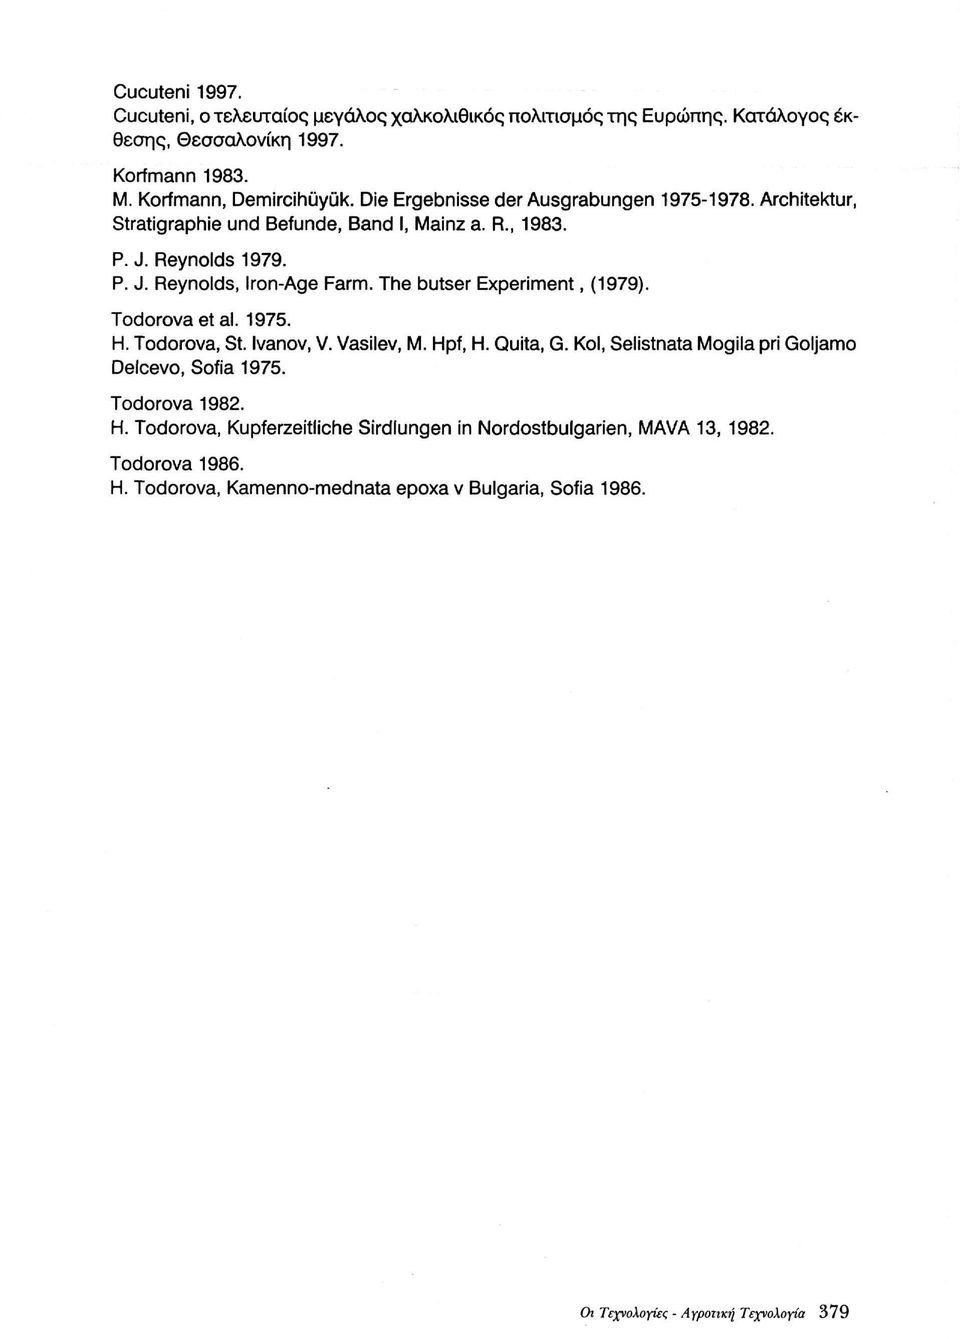 The butser Experiment, (1979). Todorova et al. 1975. H. Todorova, St. Ivanov, V. Vasilev, M. Hpf, H. Quita, G. Kol, Selistnata Mogila pri Goljamo Delcevo, Sofia 1975.